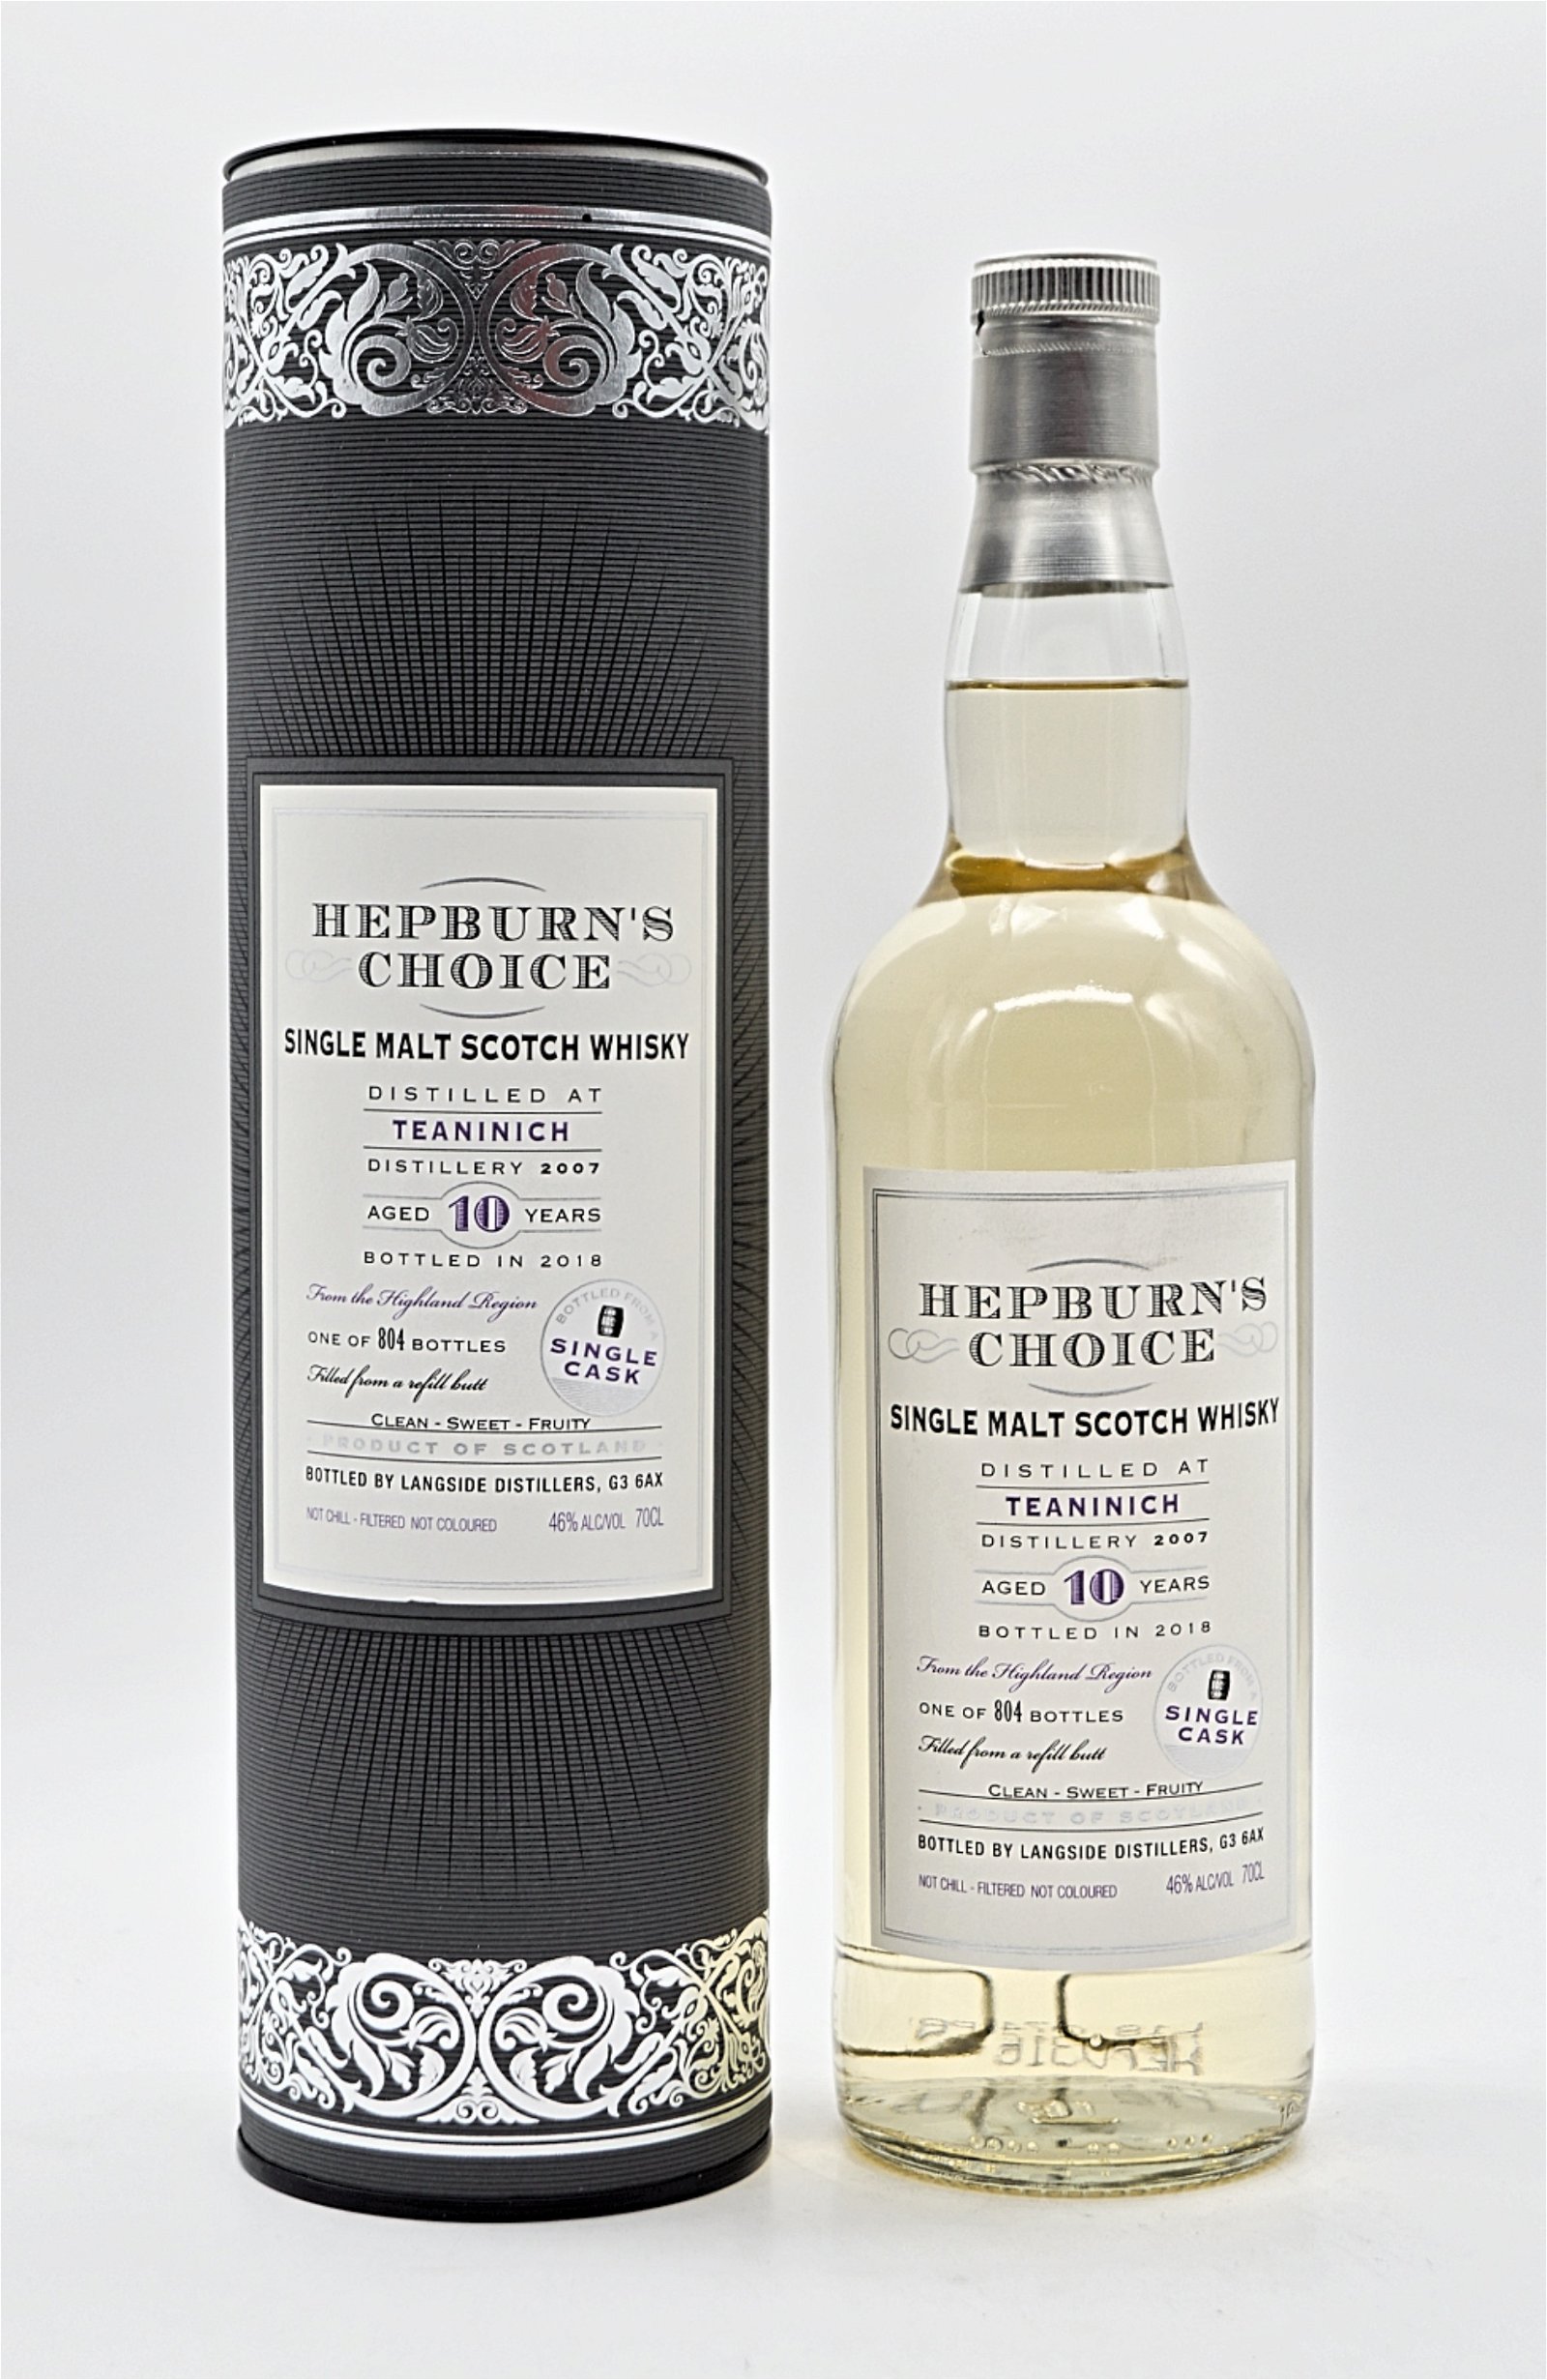 Hepburns Choice Teaninich 10 Jahre 2007/2018 - 804 Fl. Single Malt Scotch Whisky